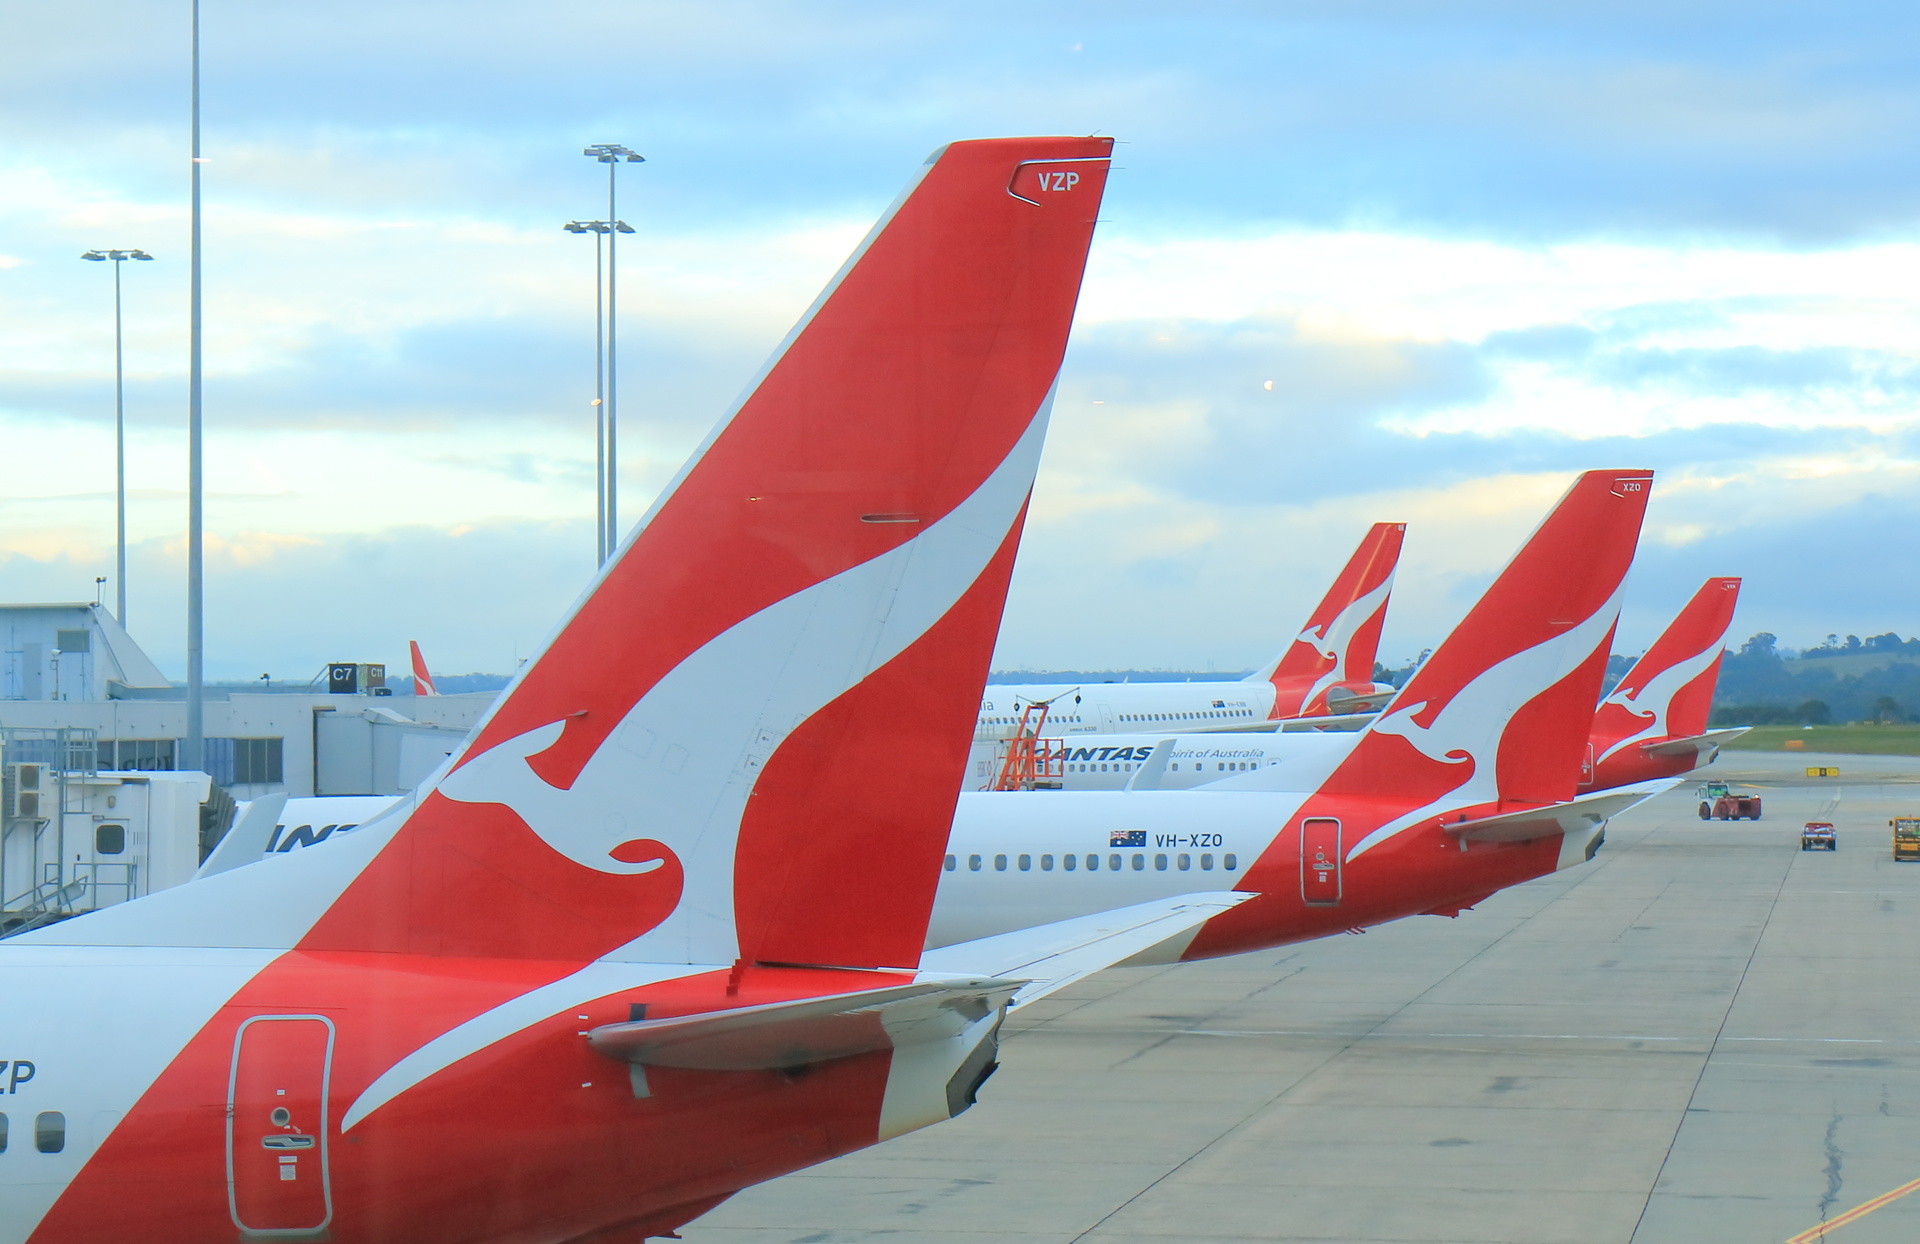 82216966 - melbourne australia - july 8, 2017: qantas airplanes wait for departure at melbourne airport australia.